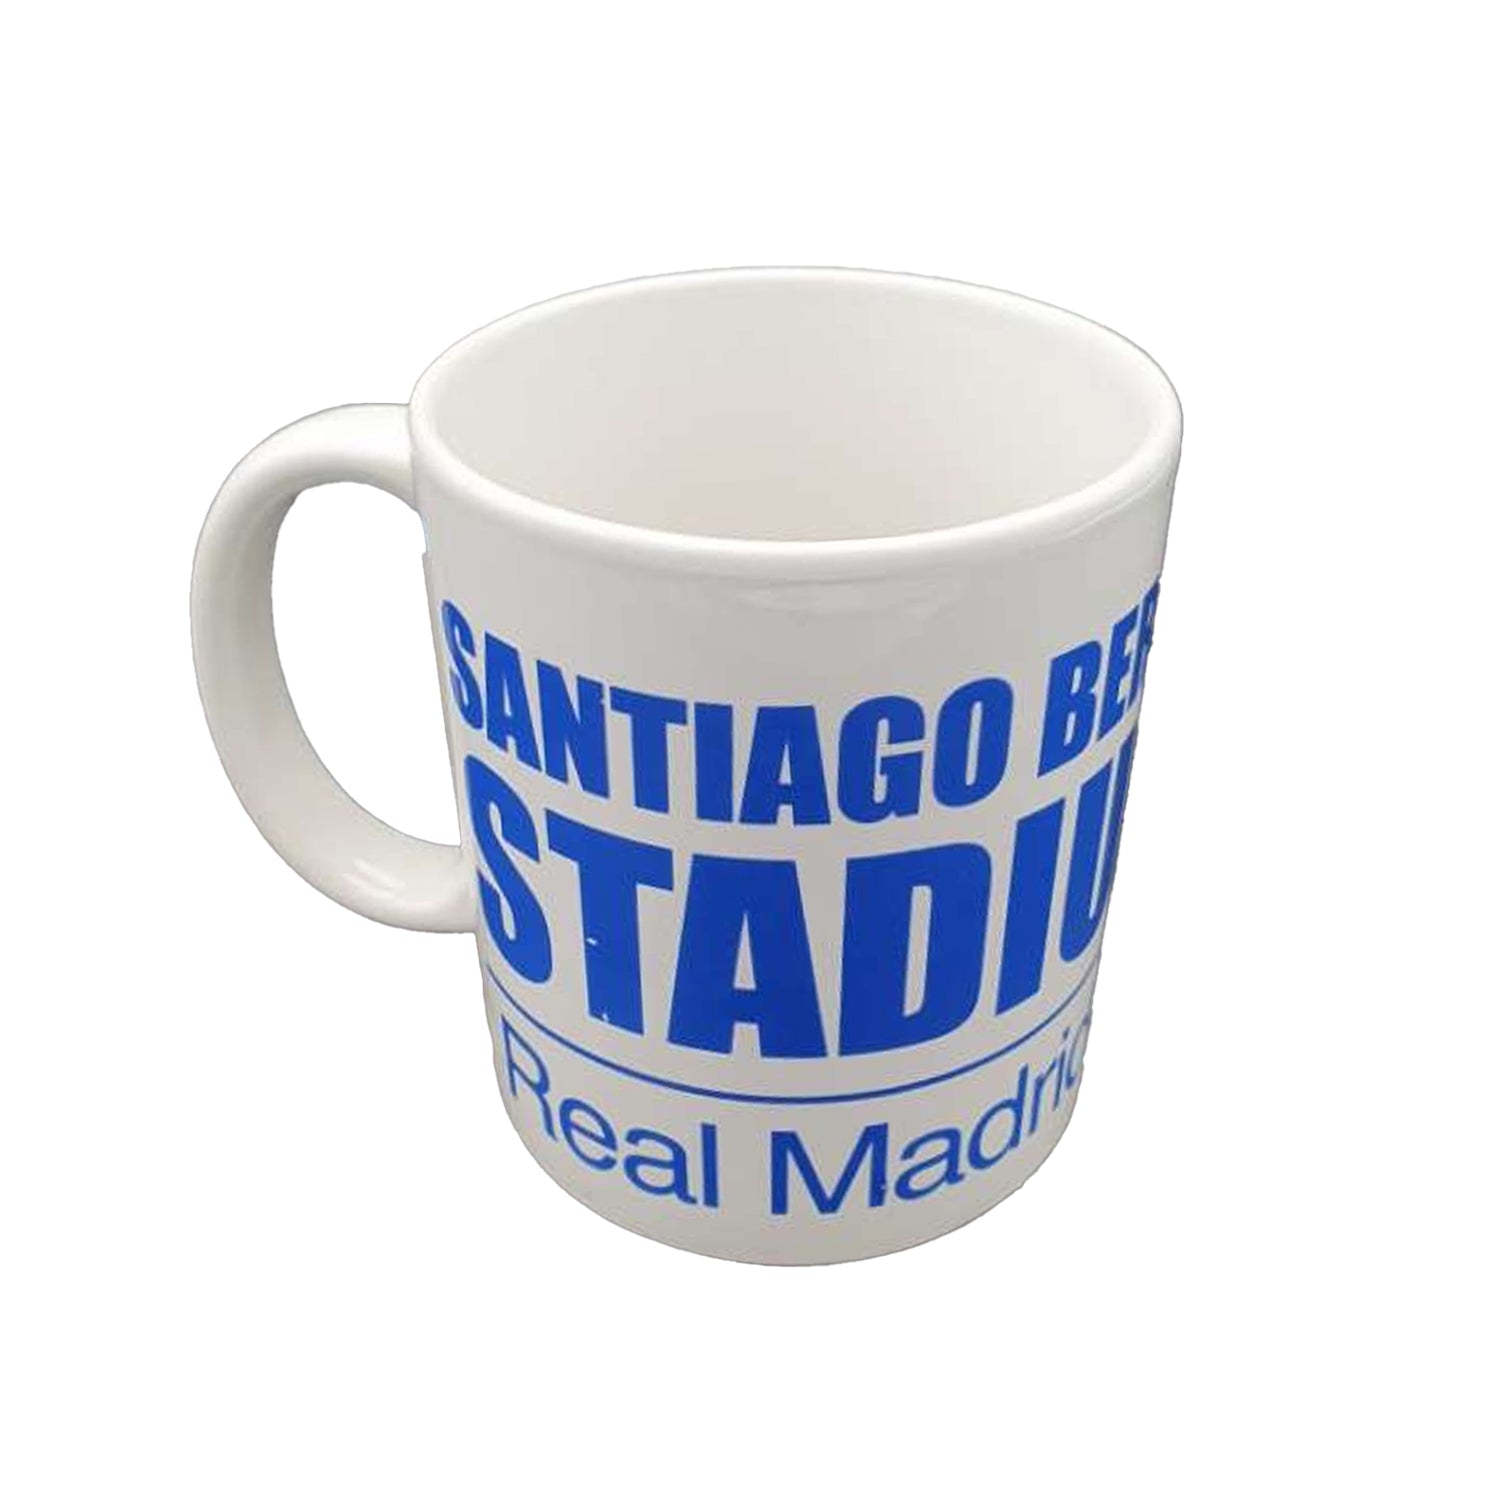 Real Madrid Ceramic Mug Crest Blue